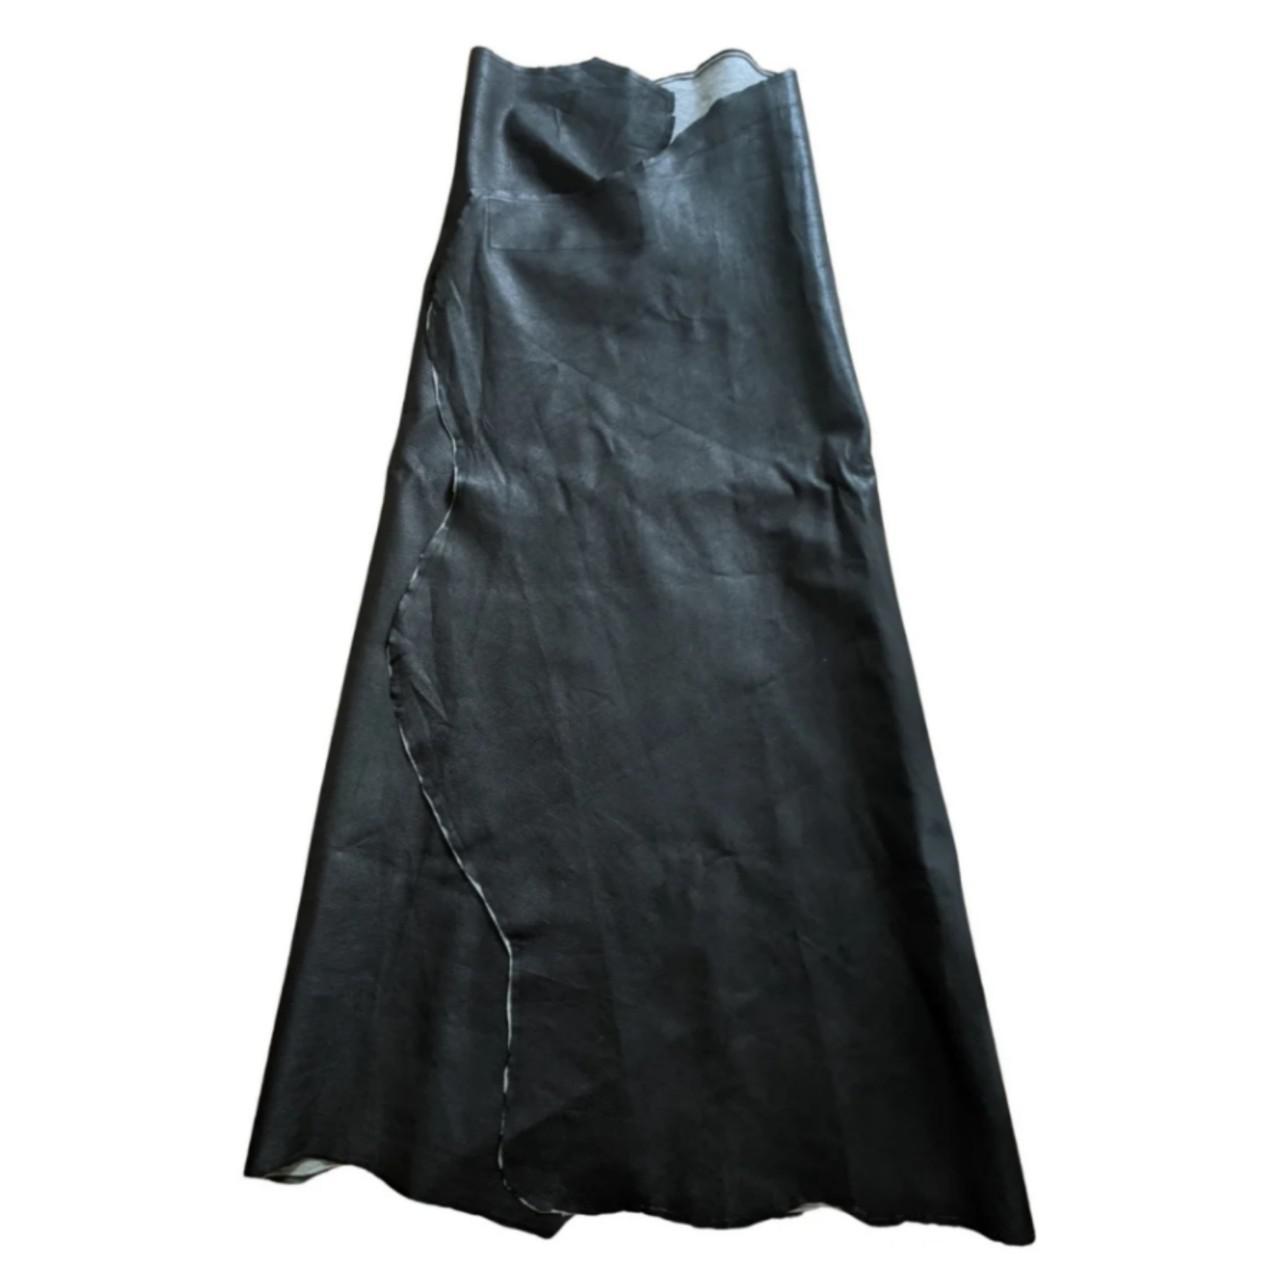 Maison Margiela Women's Black and Grey Skirt